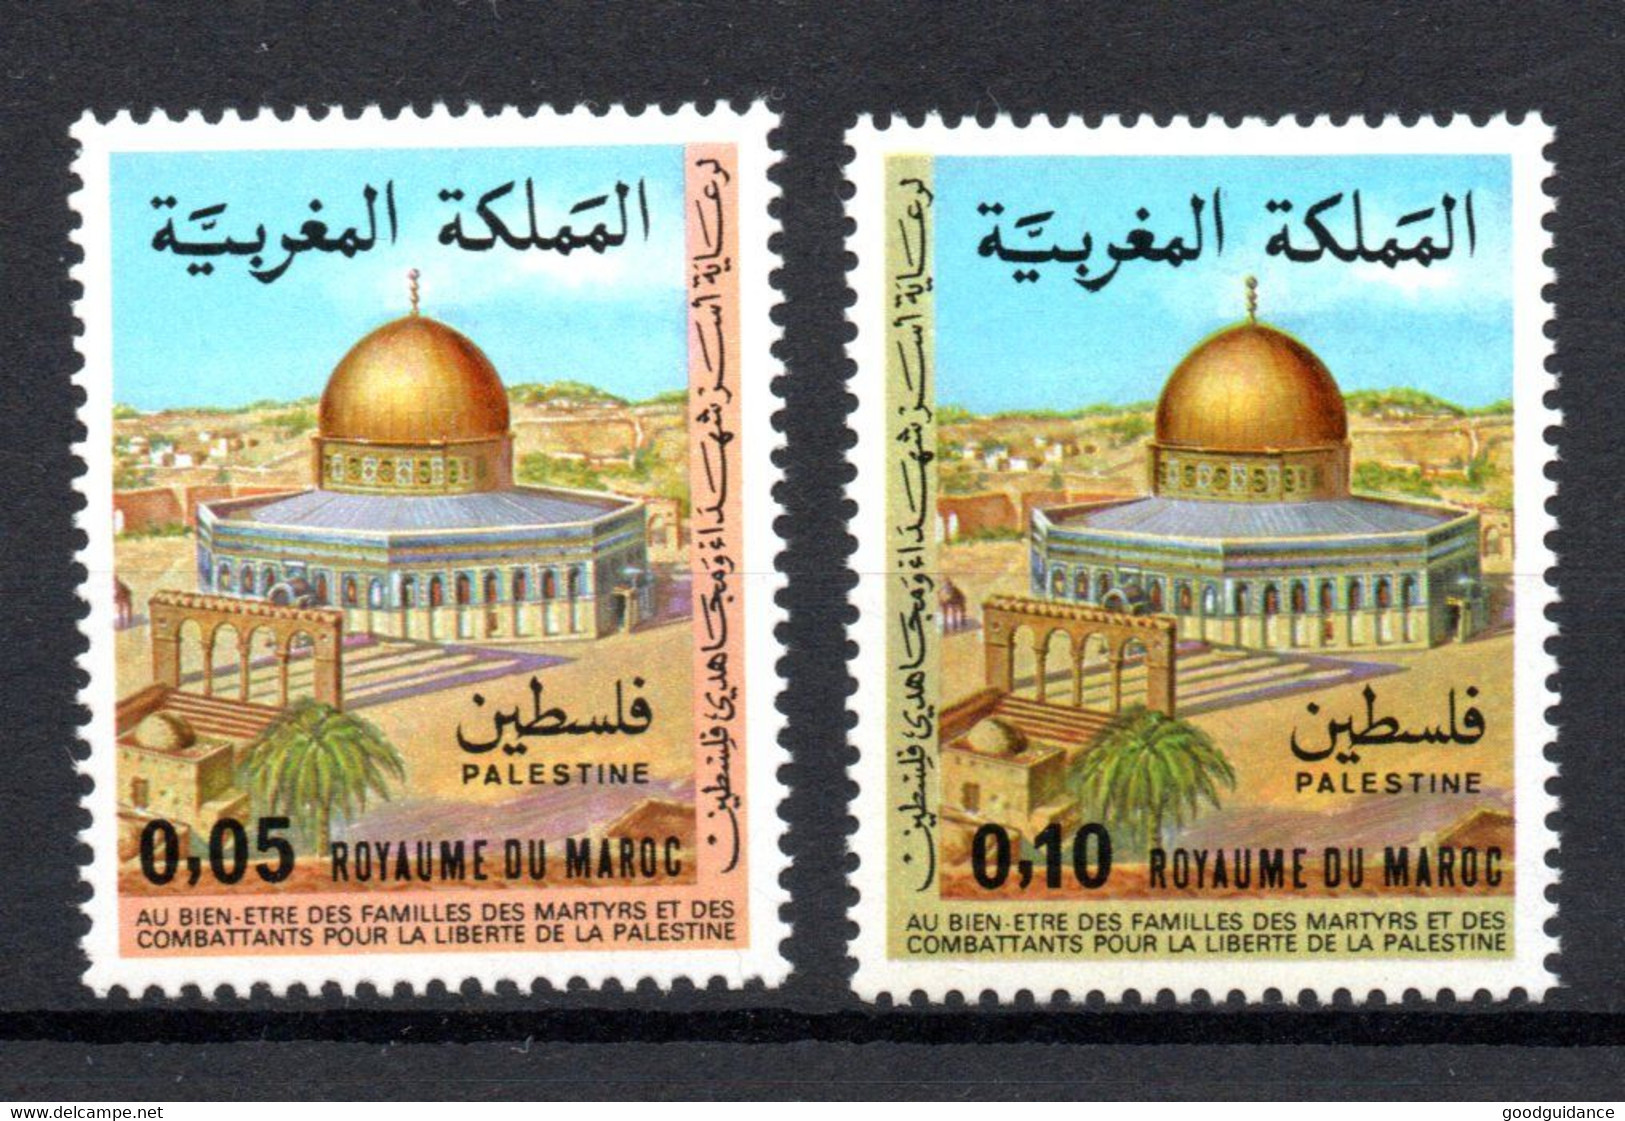 1978 - Morocco- Maroc- Palestinian  Solidarity- Soutien Aux Palestiniens- Dome- Jerusalem- El Quds-  Set 2v.MNH** - Mezquitas Y Sinagogas